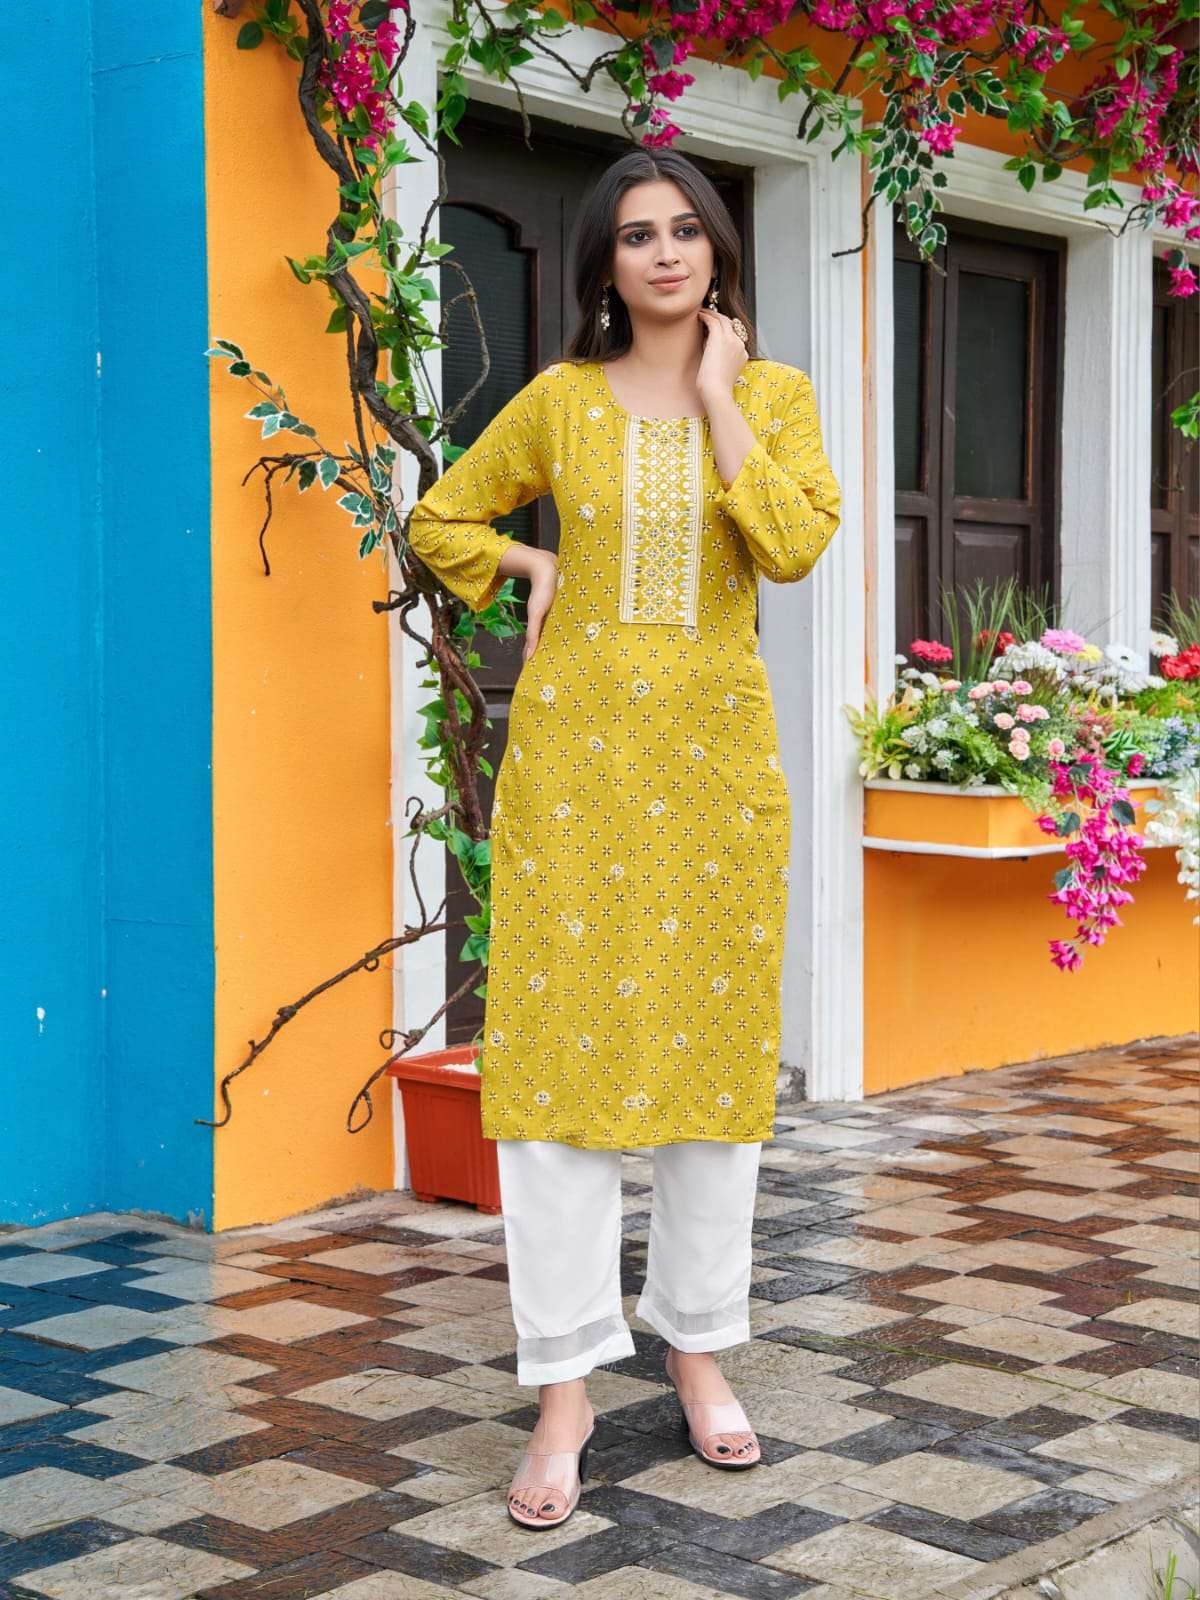 Design Kurti Pant Set Ethnic Wear For Women at Rs 2362 | Kurti With Pants,  कुरती पैंट सेट - Marketing / Advertising, Mumbai | ID: 27591262691